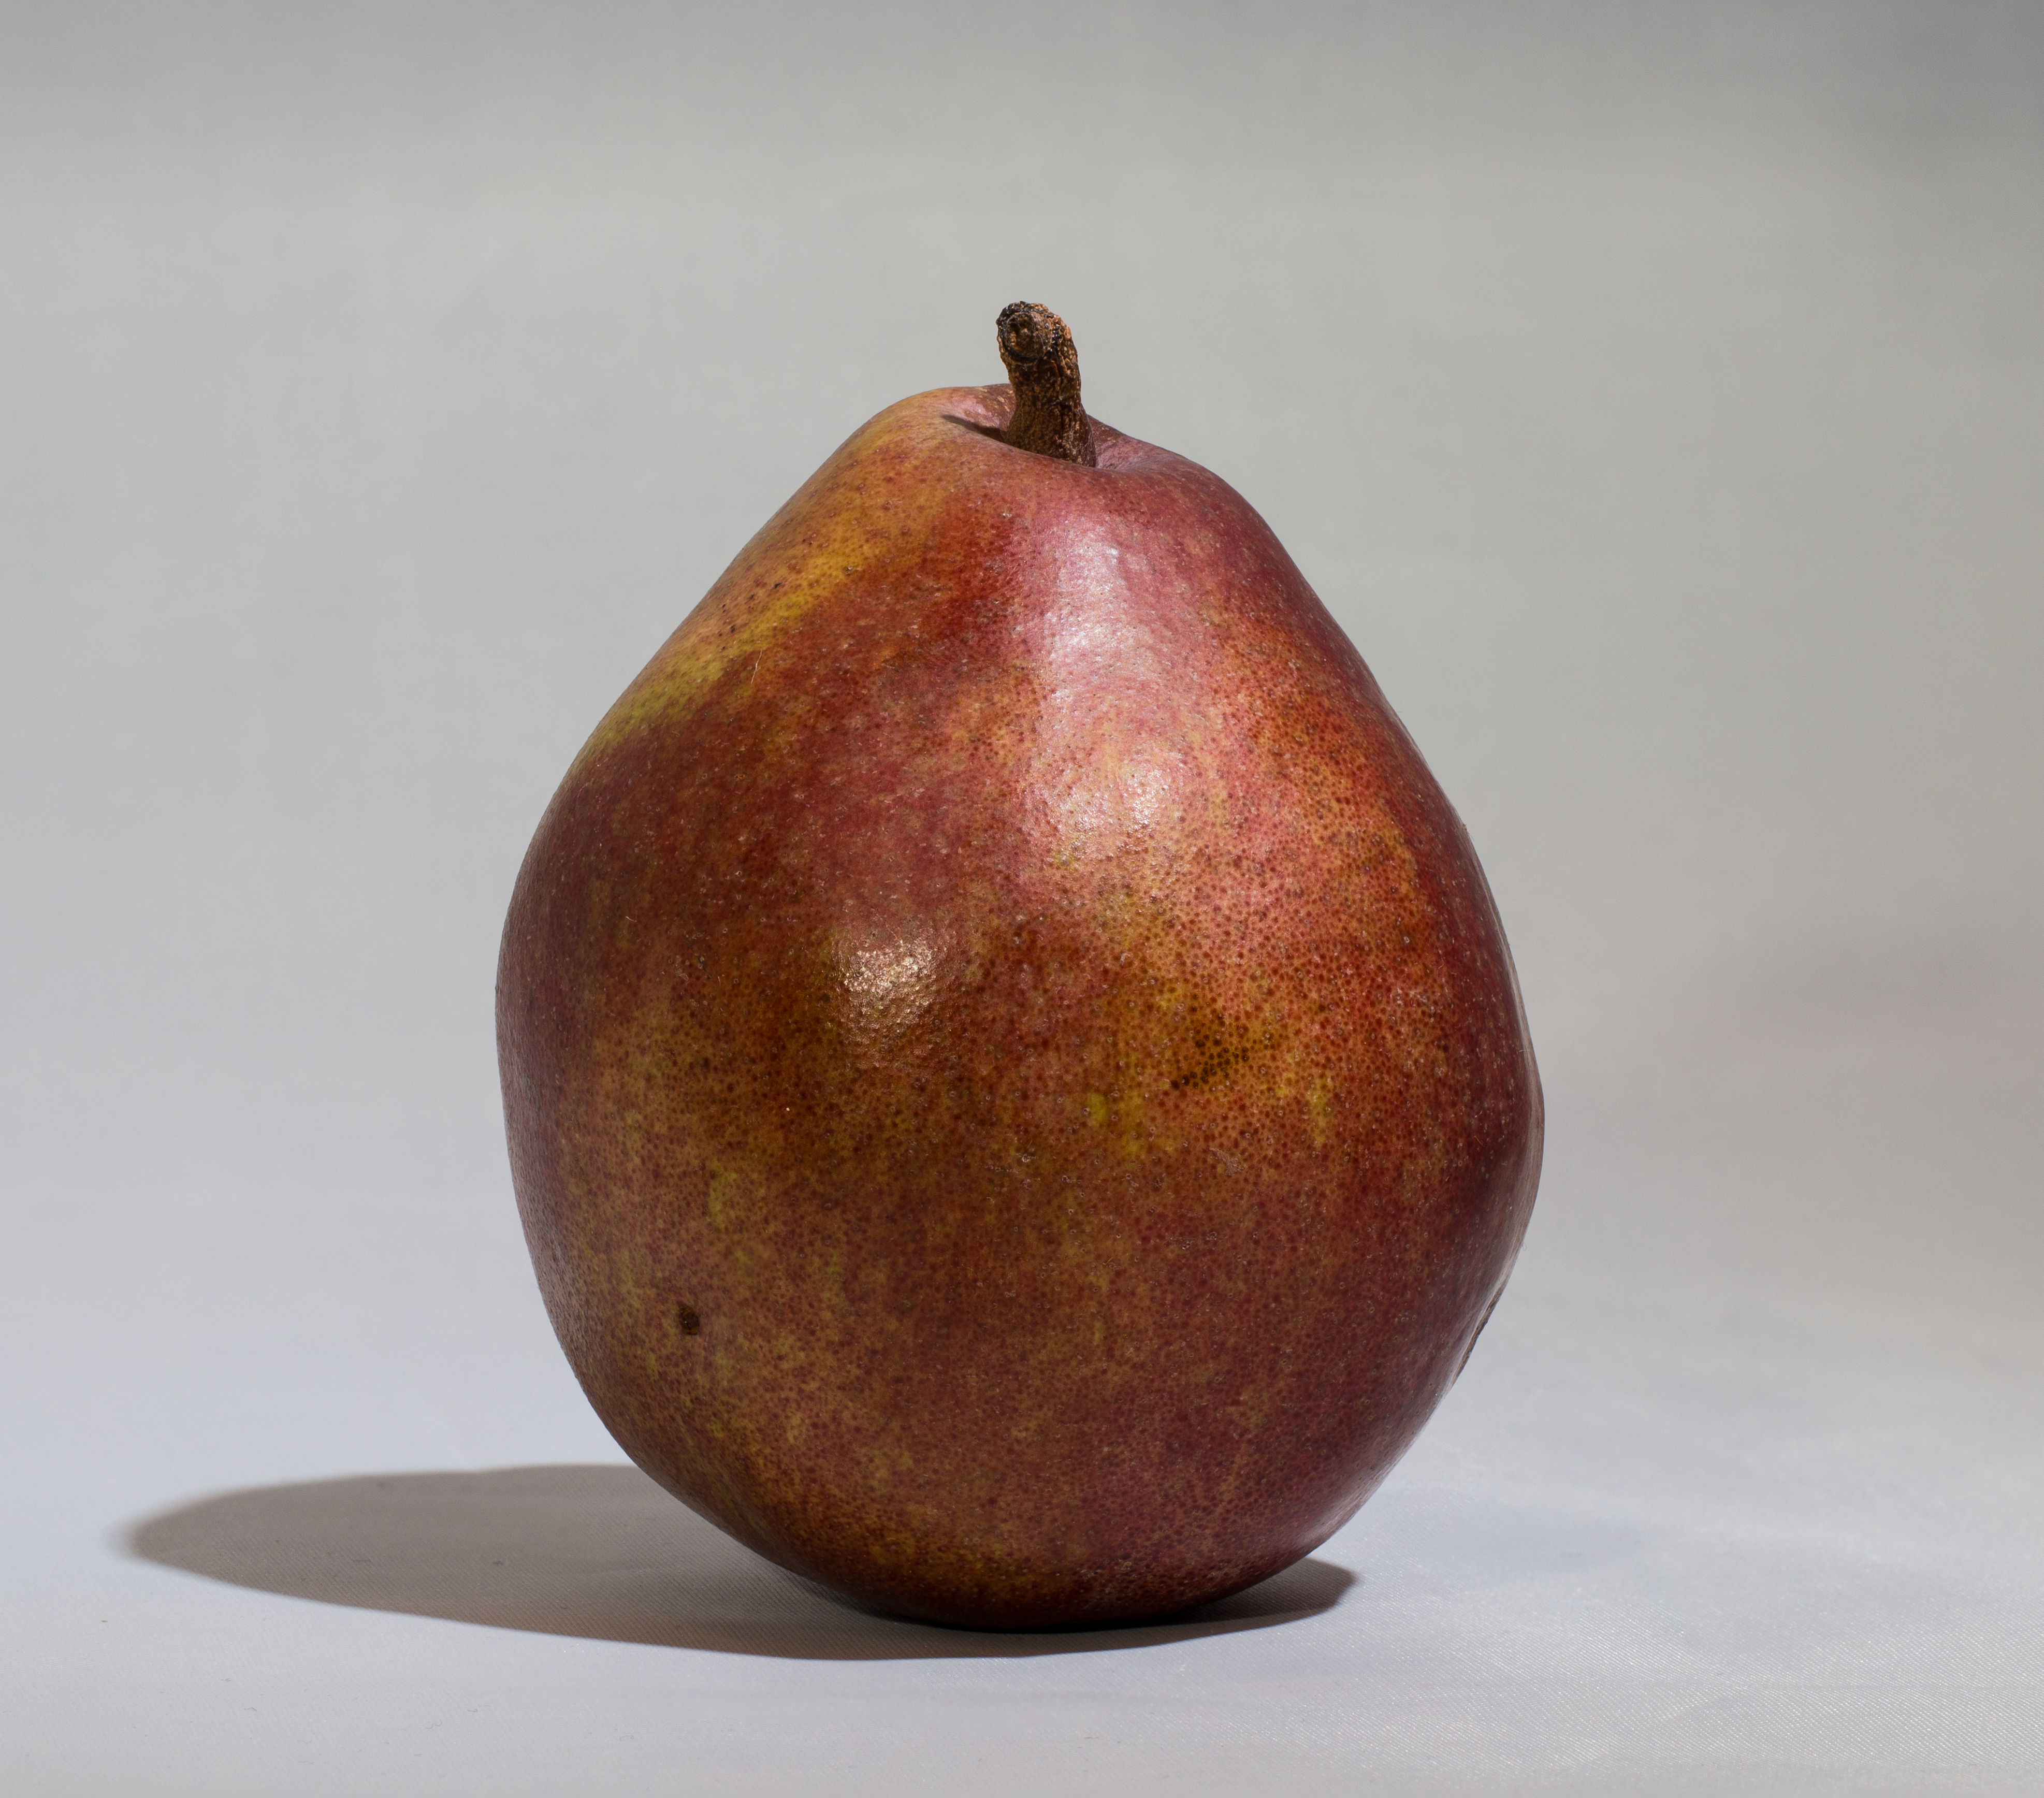 Red Bartlett pear